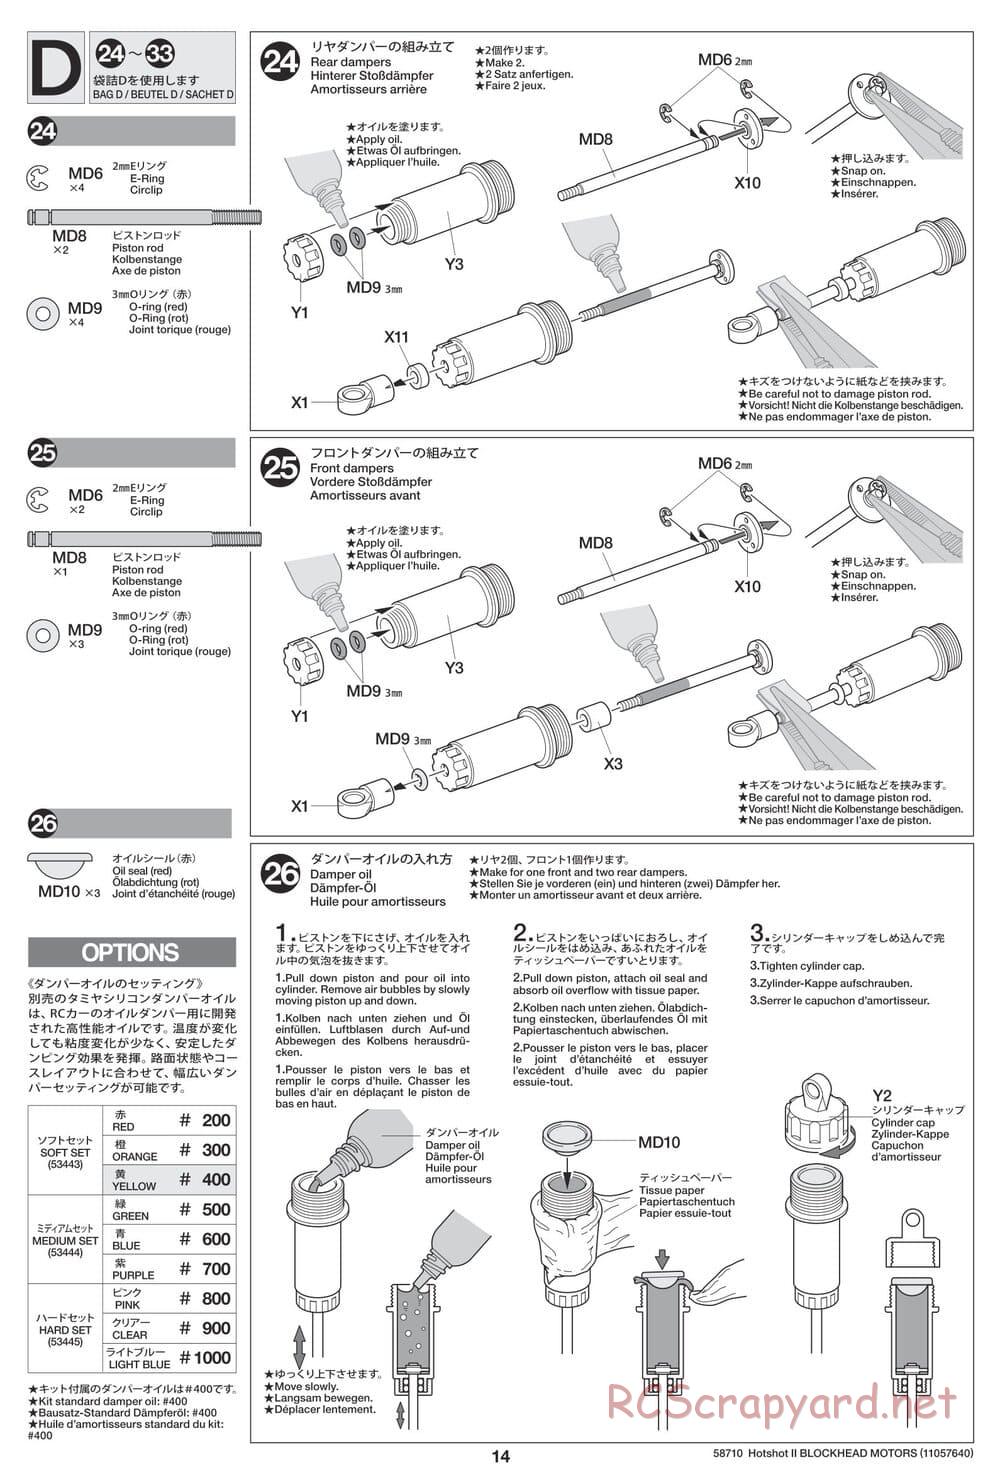 Tamiya - Hotshot II Blockhead Motors - HS Chassis - Manual - Page 14